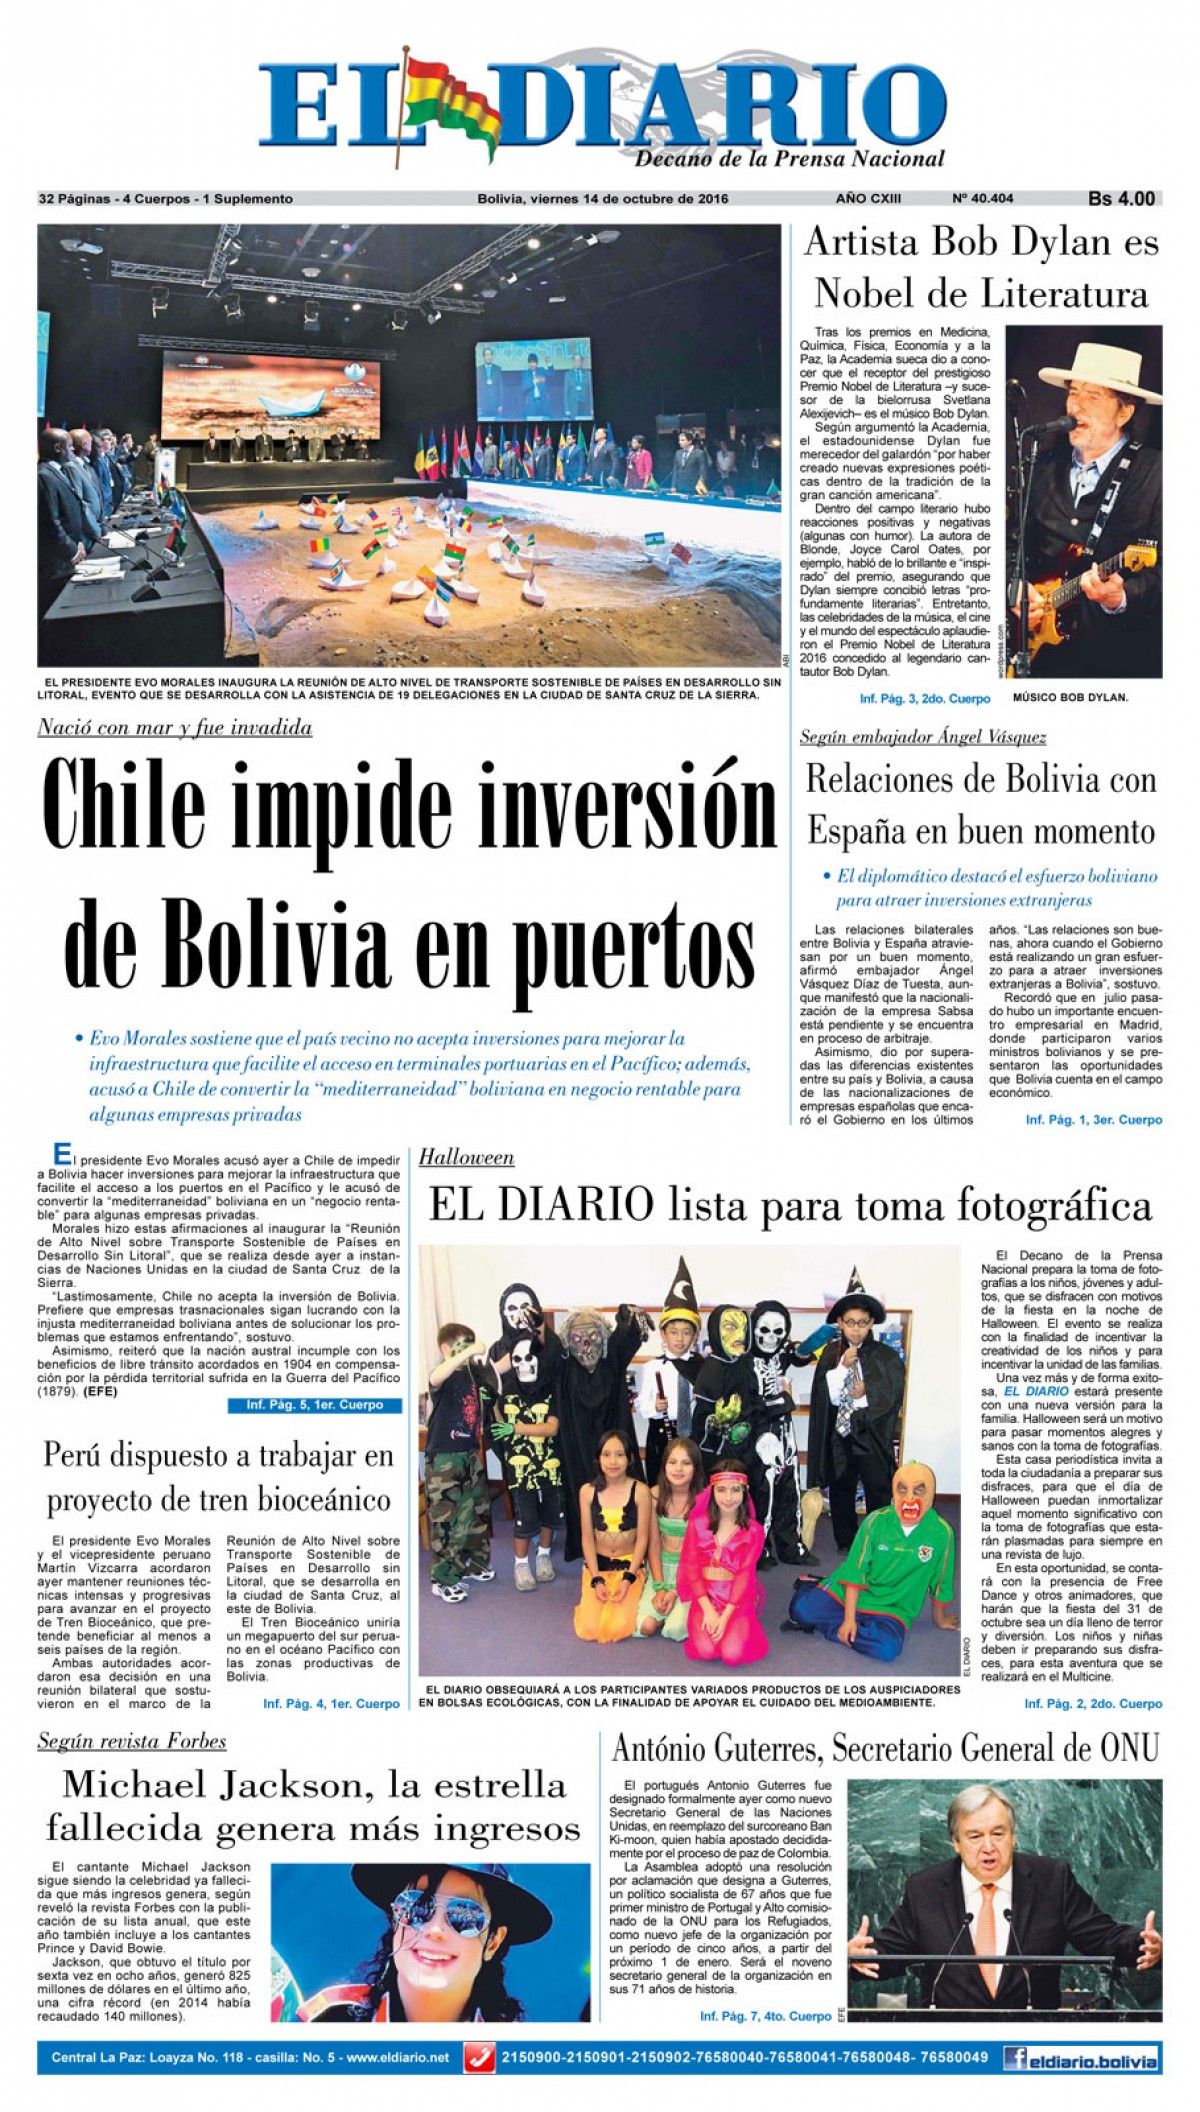 el diario bolivia magazine Bob Dylan front cover